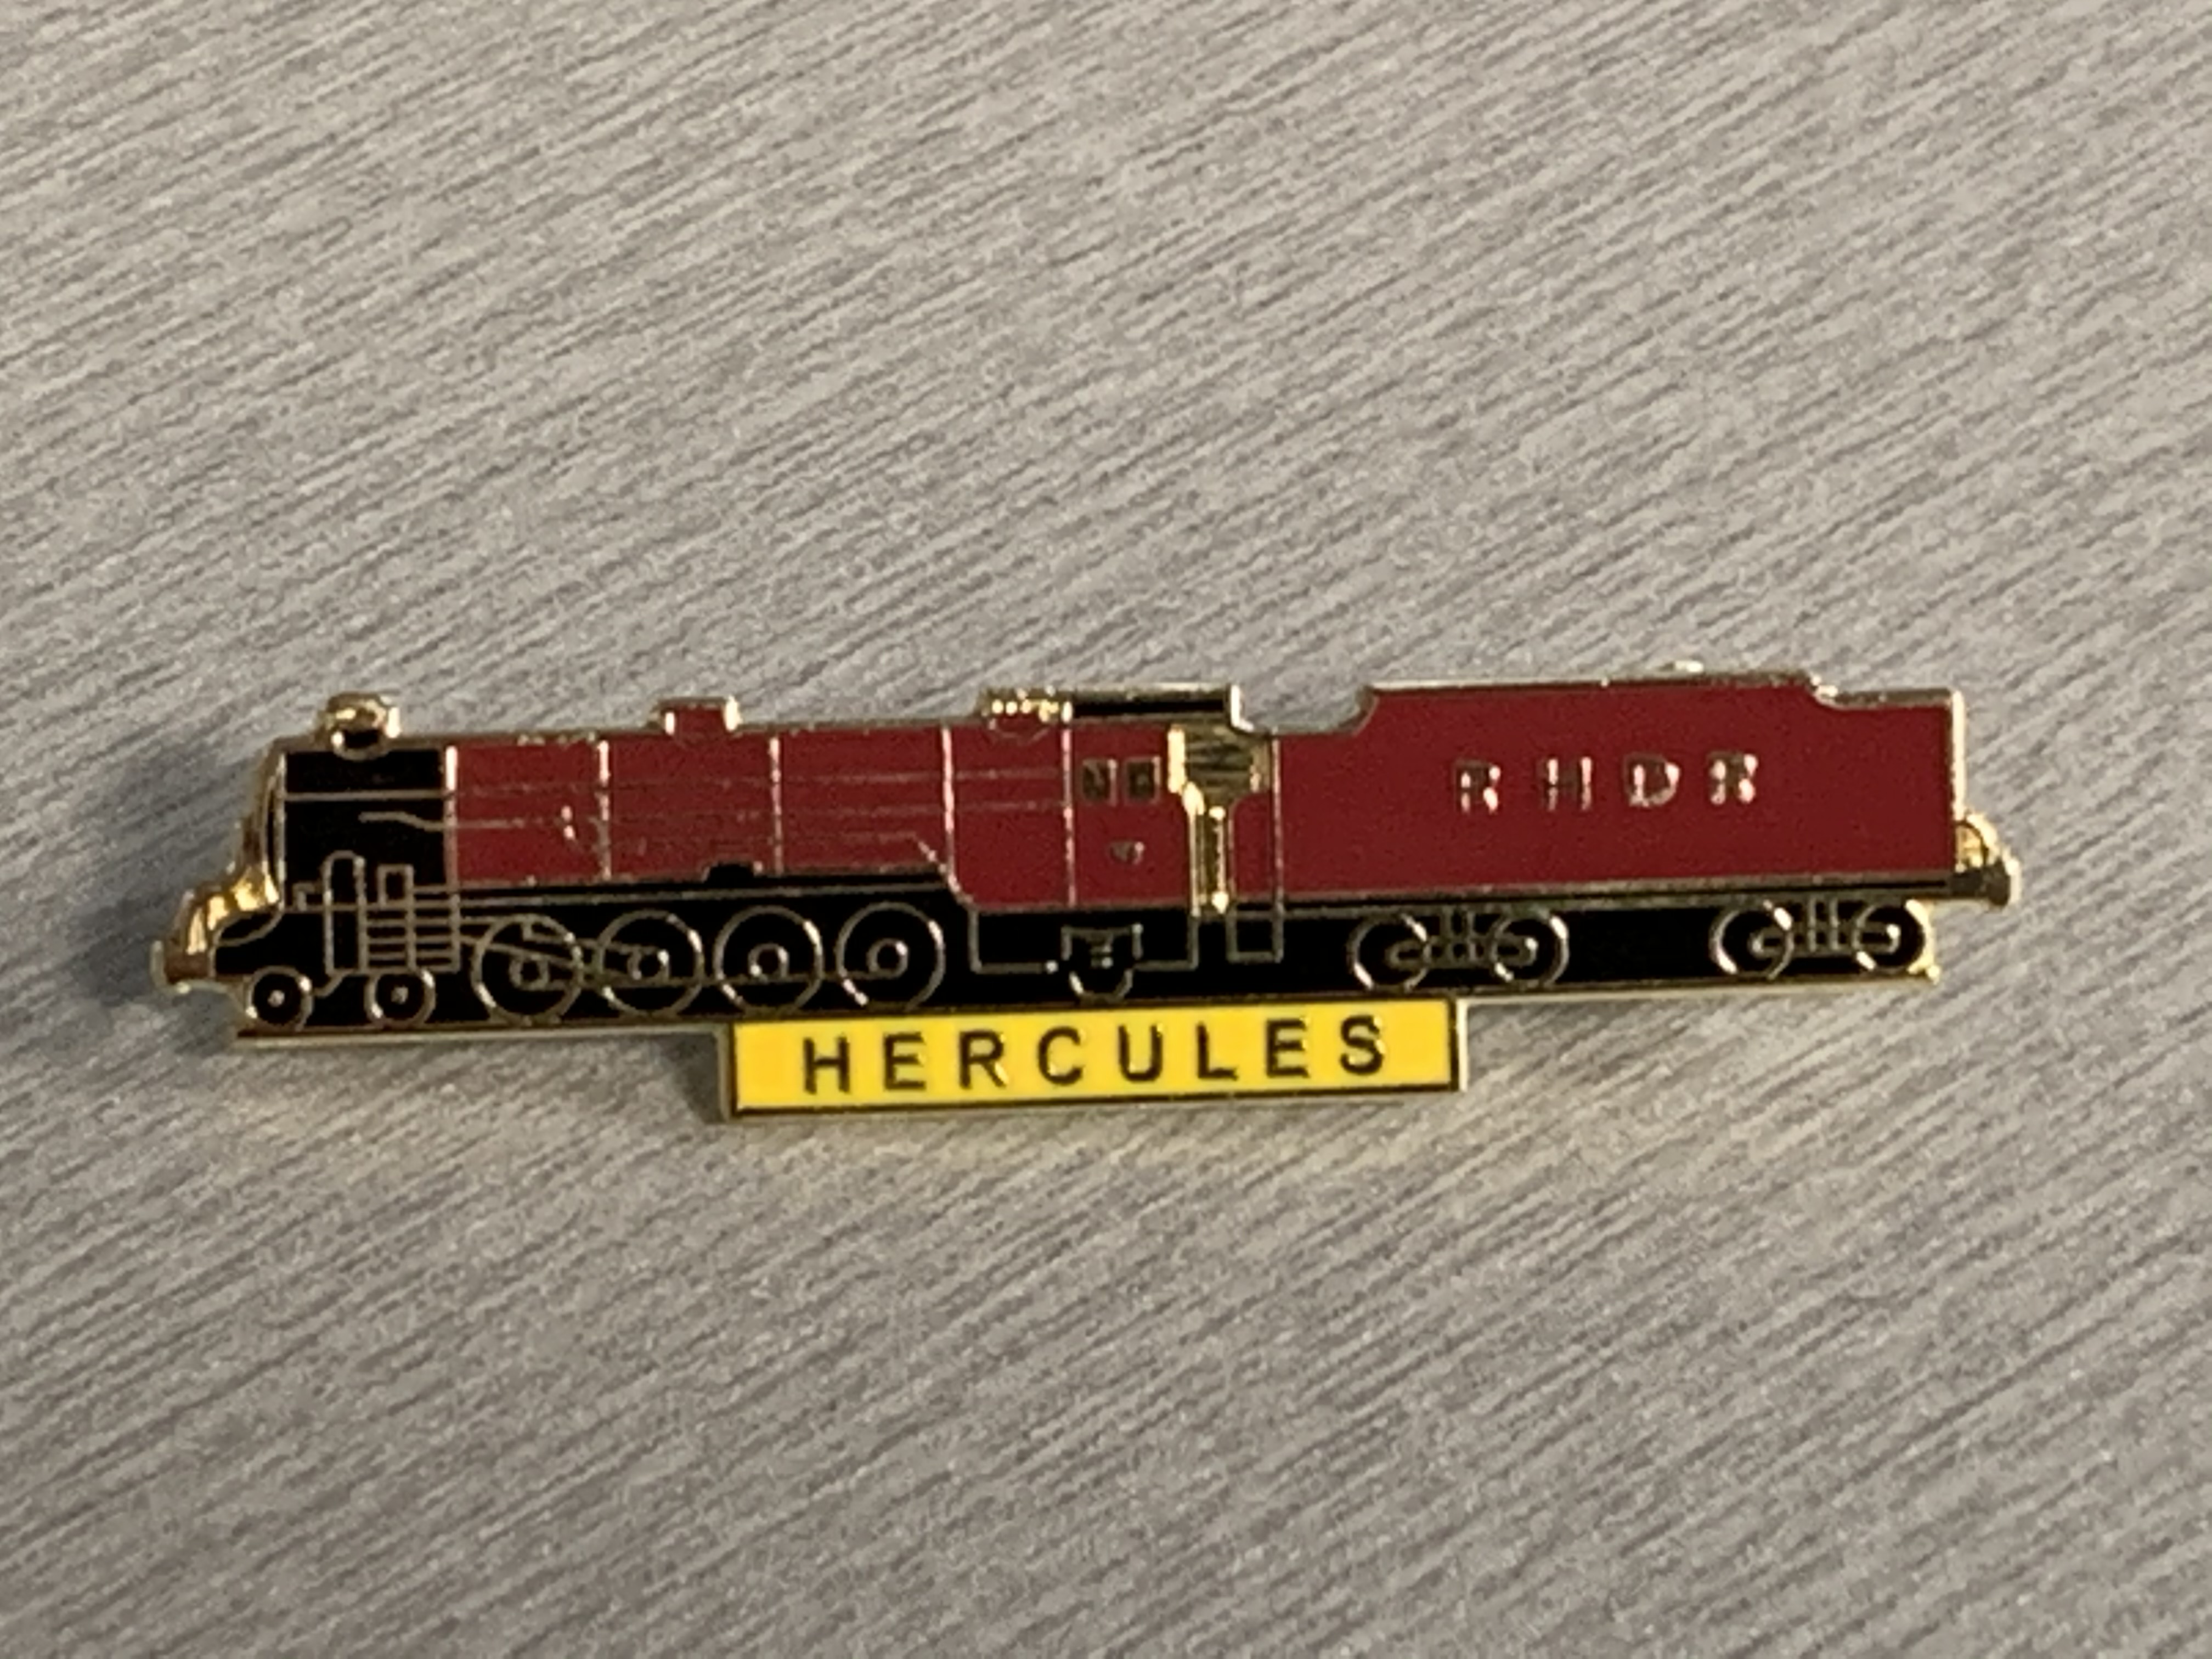 Hercules Locomotive Badge